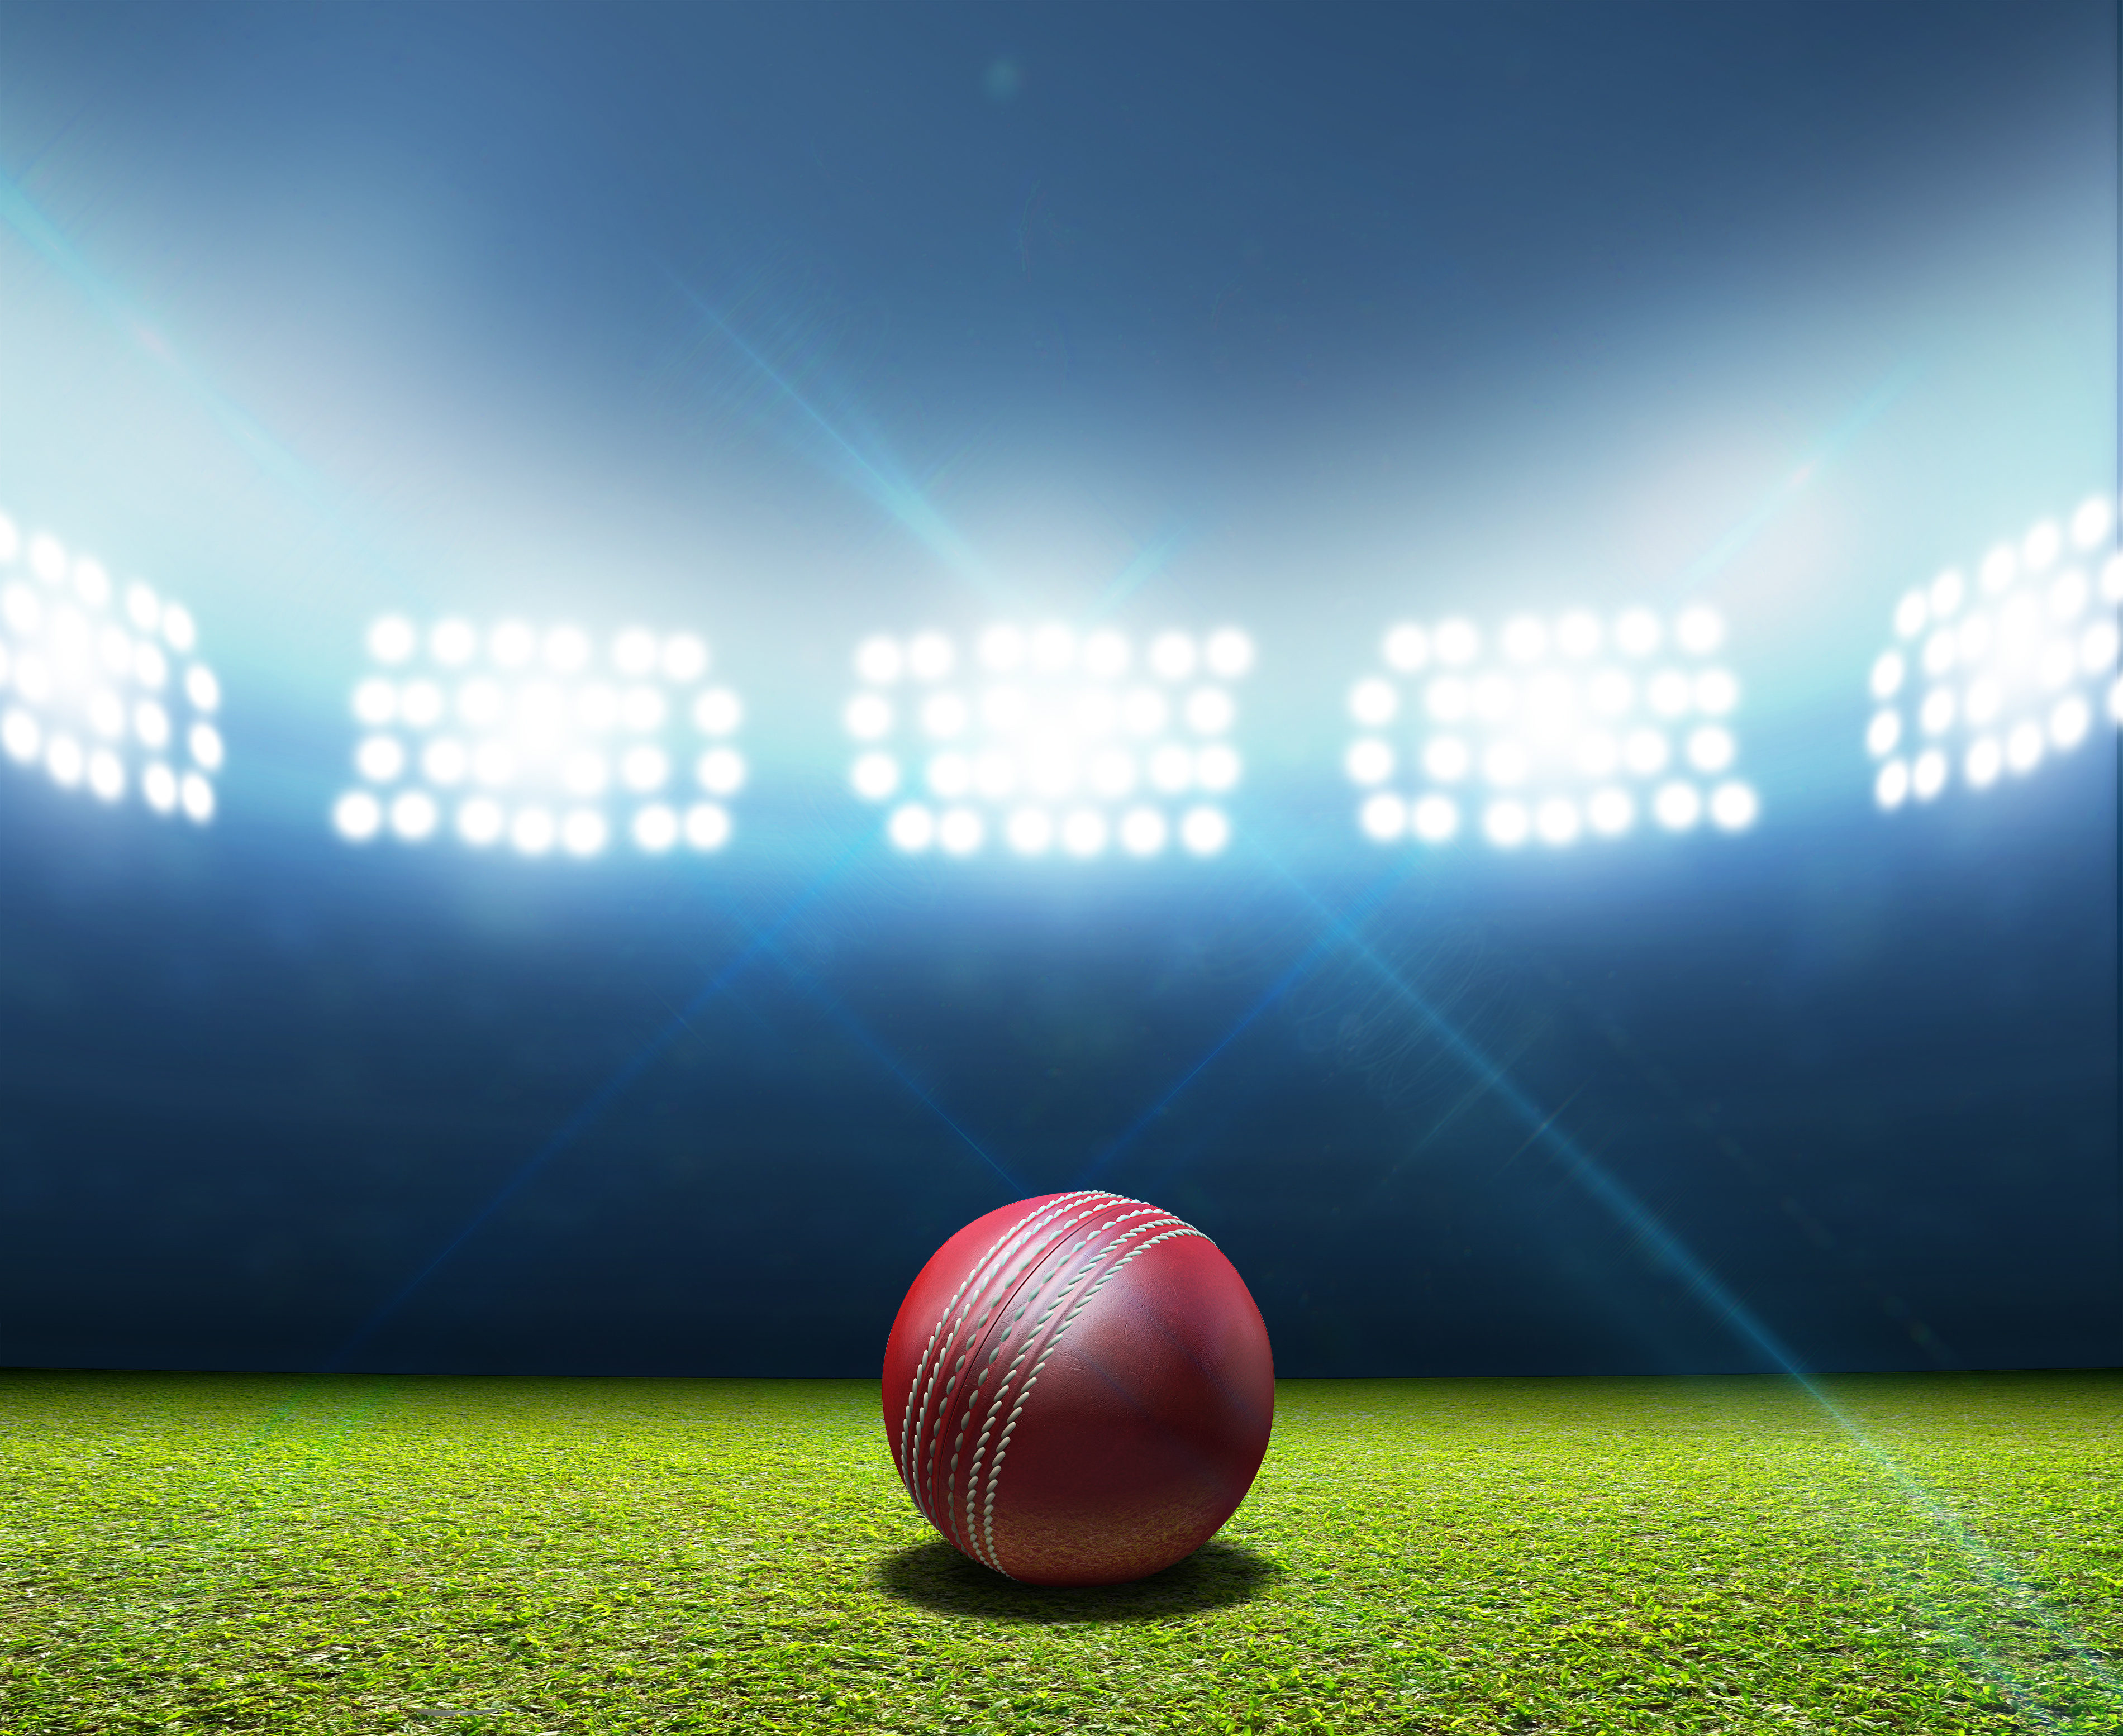 Betfair Trading Advice - Cricket - Winning Edge Investments